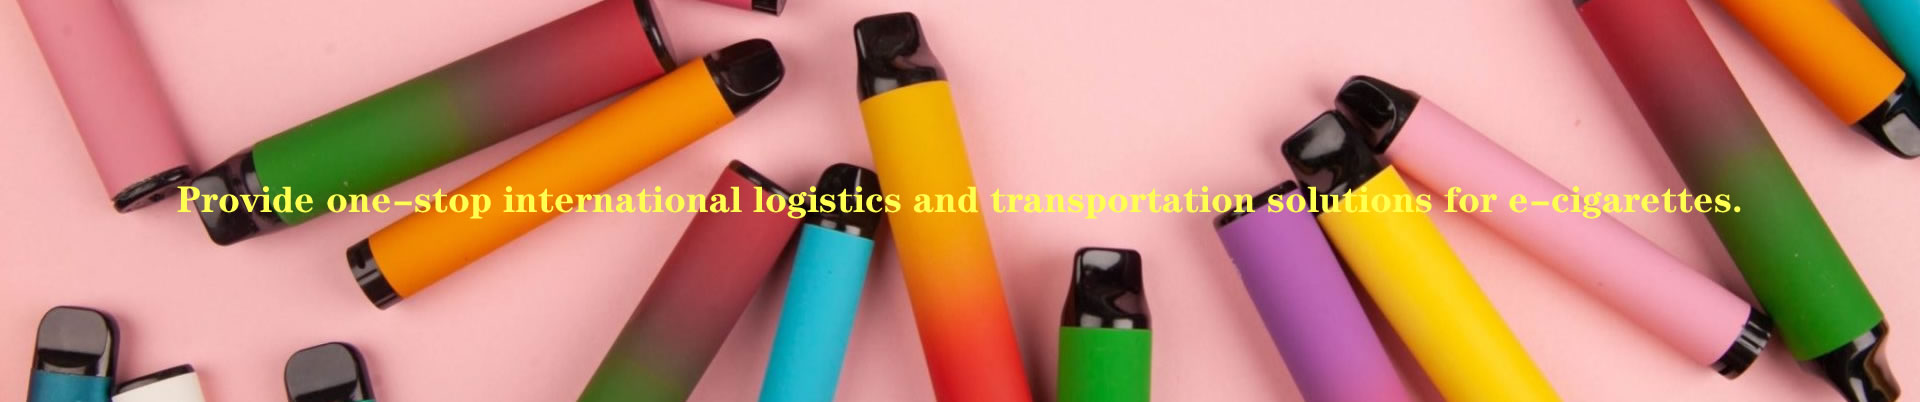 E-cigarettes: Provide one-stop international logistics and transportation solutions for e-cigarettes.